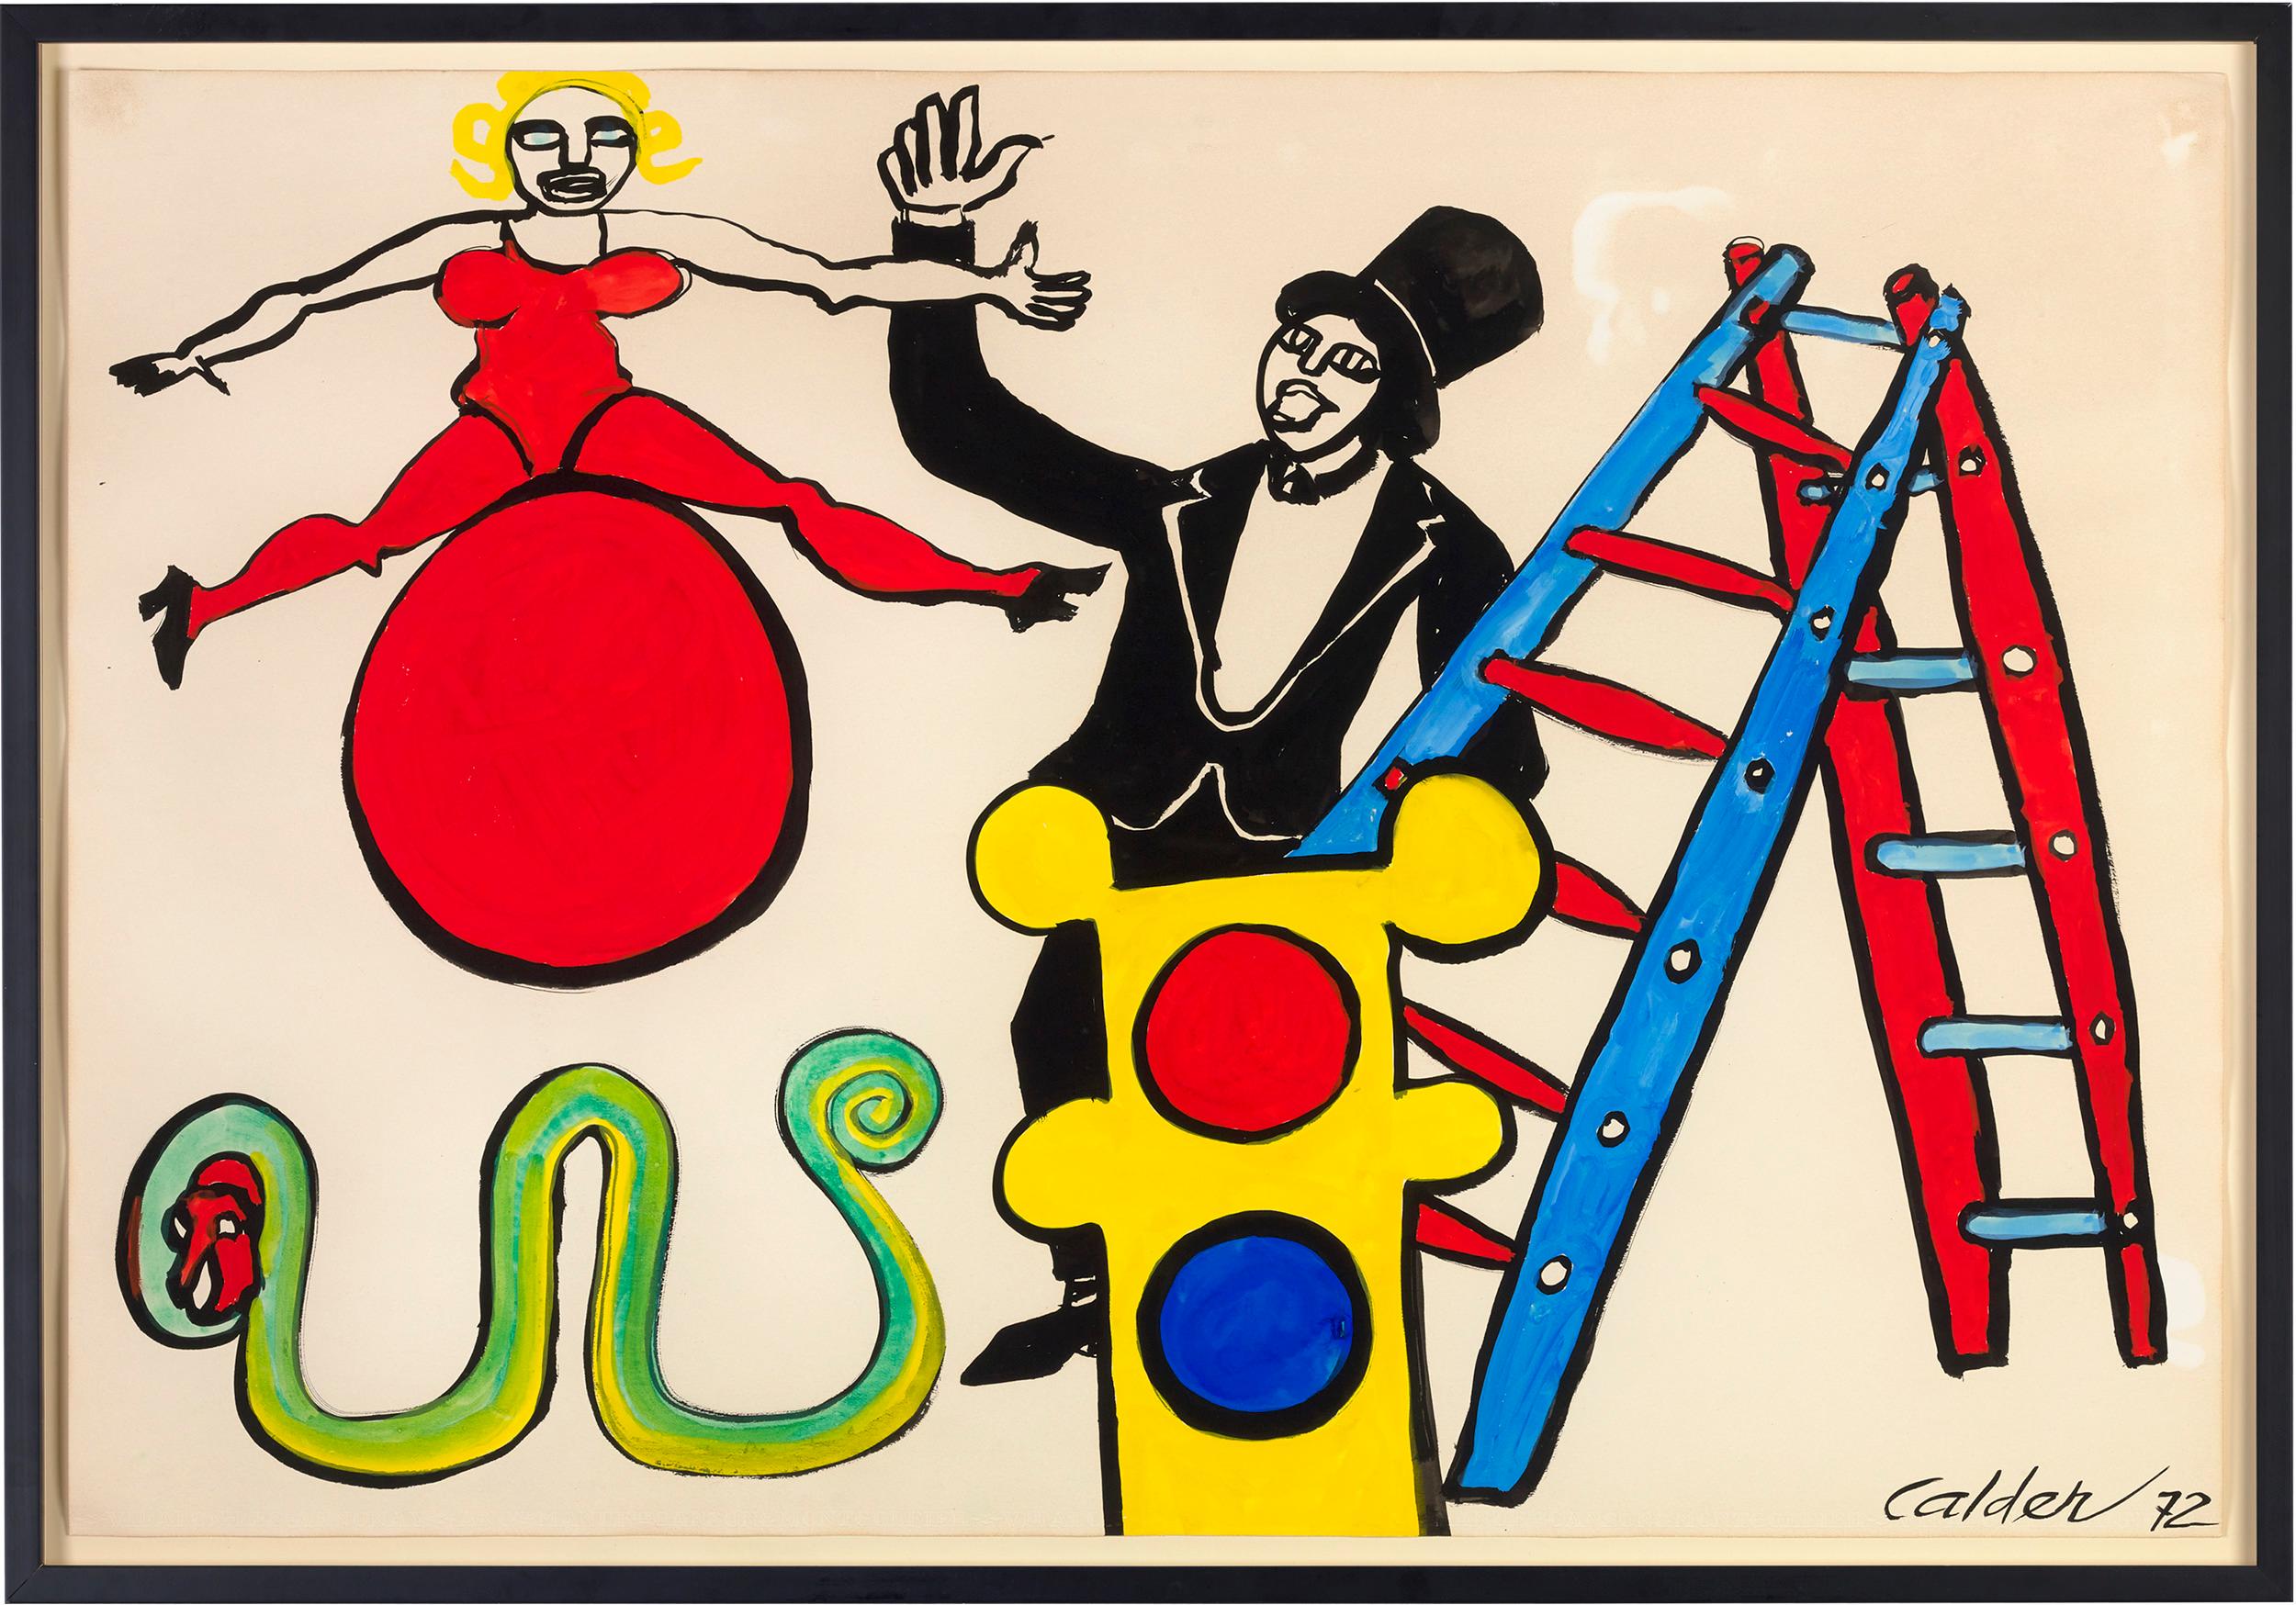 Alexander Calder
1898 – 1976  American

Serpent vert
(Green Serpent)

Gouache and ink on paper
Signed and dated “Calder 72” (lower right)

A masterwork in a rare medium, this gouache and ink on paper by the artistic legend Alexander Calder is an